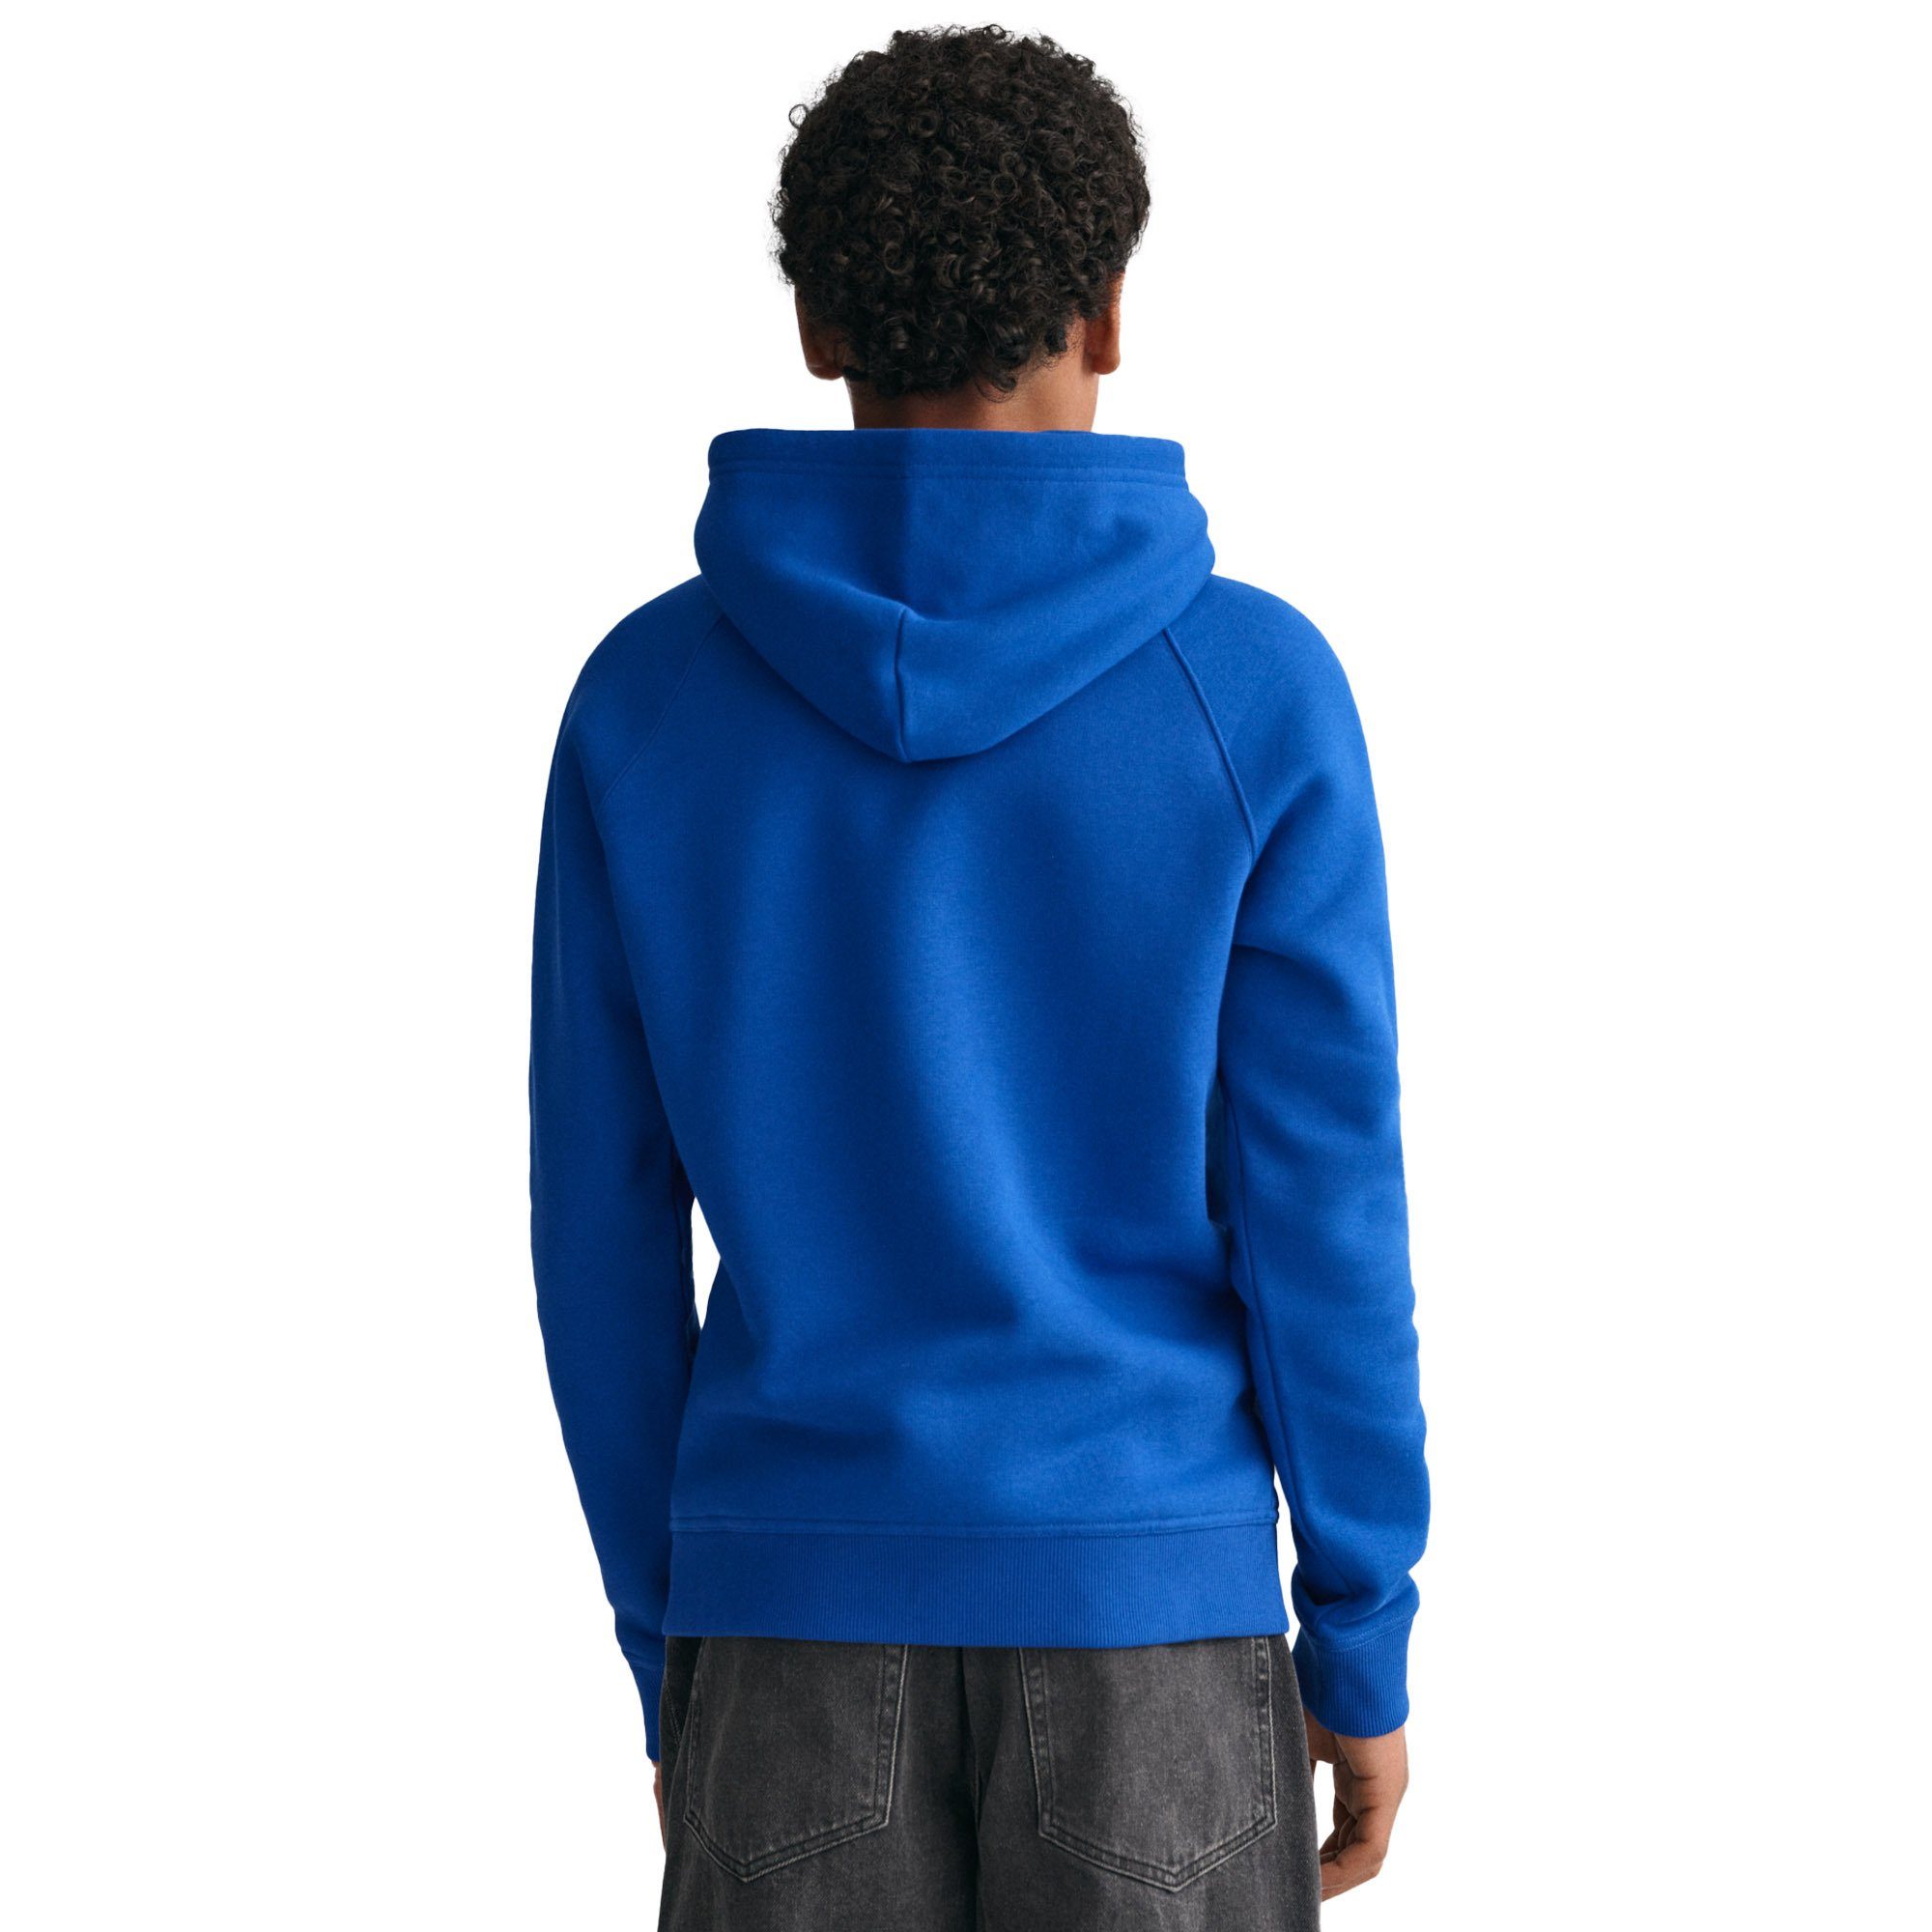 ARCHIVE SHIELD Blue) HOODIE Sweatshirt (Bold Gant Kinder Blau - Sweatshirt